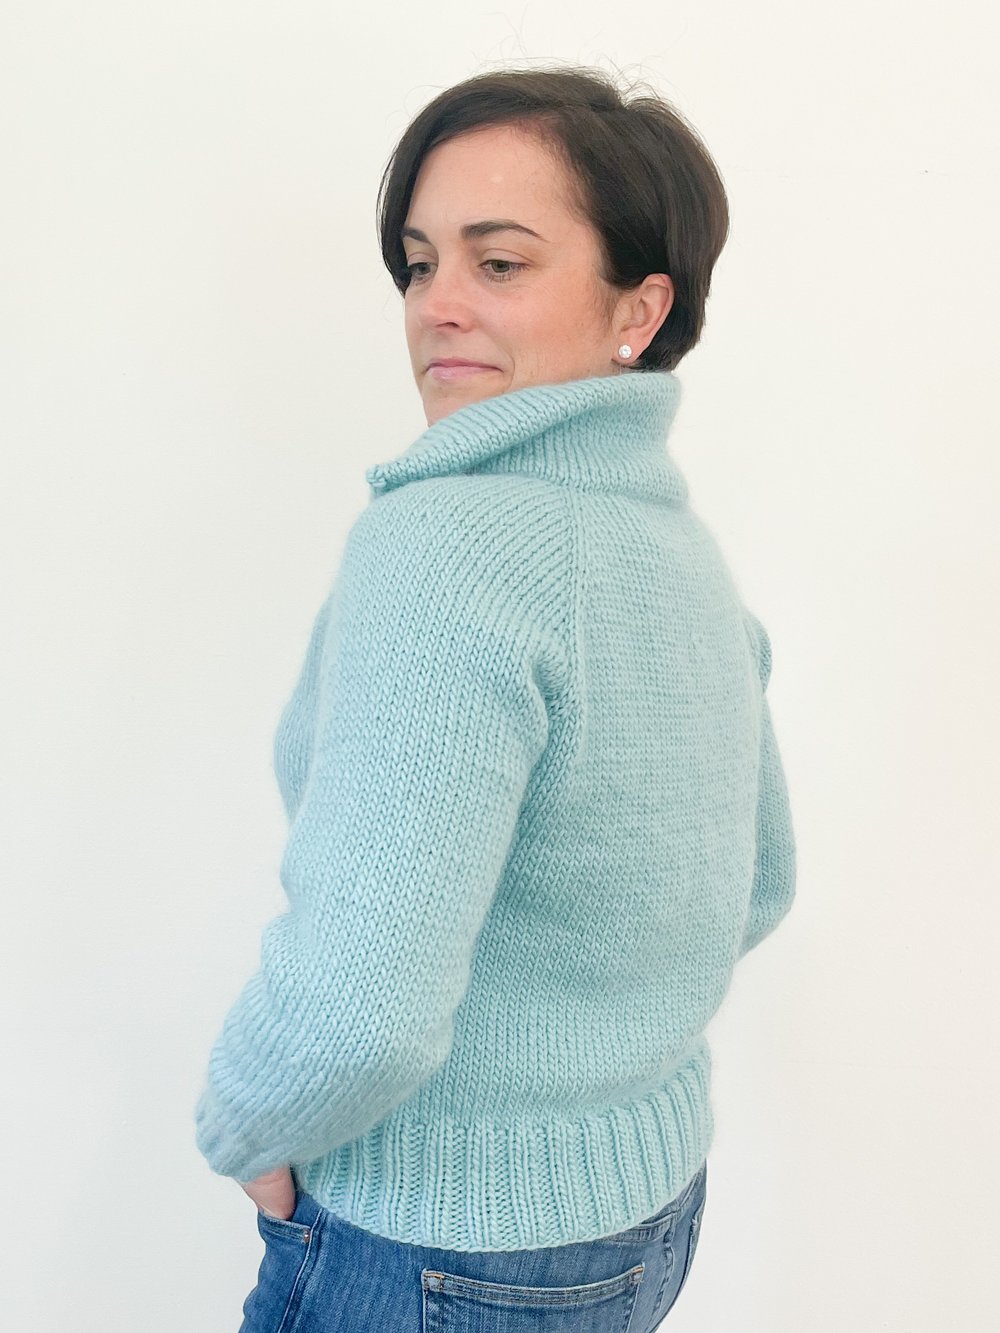 Cozy Top Down Raglan Sweater Knitting Pattern | Wishlist Pullover Lite ...